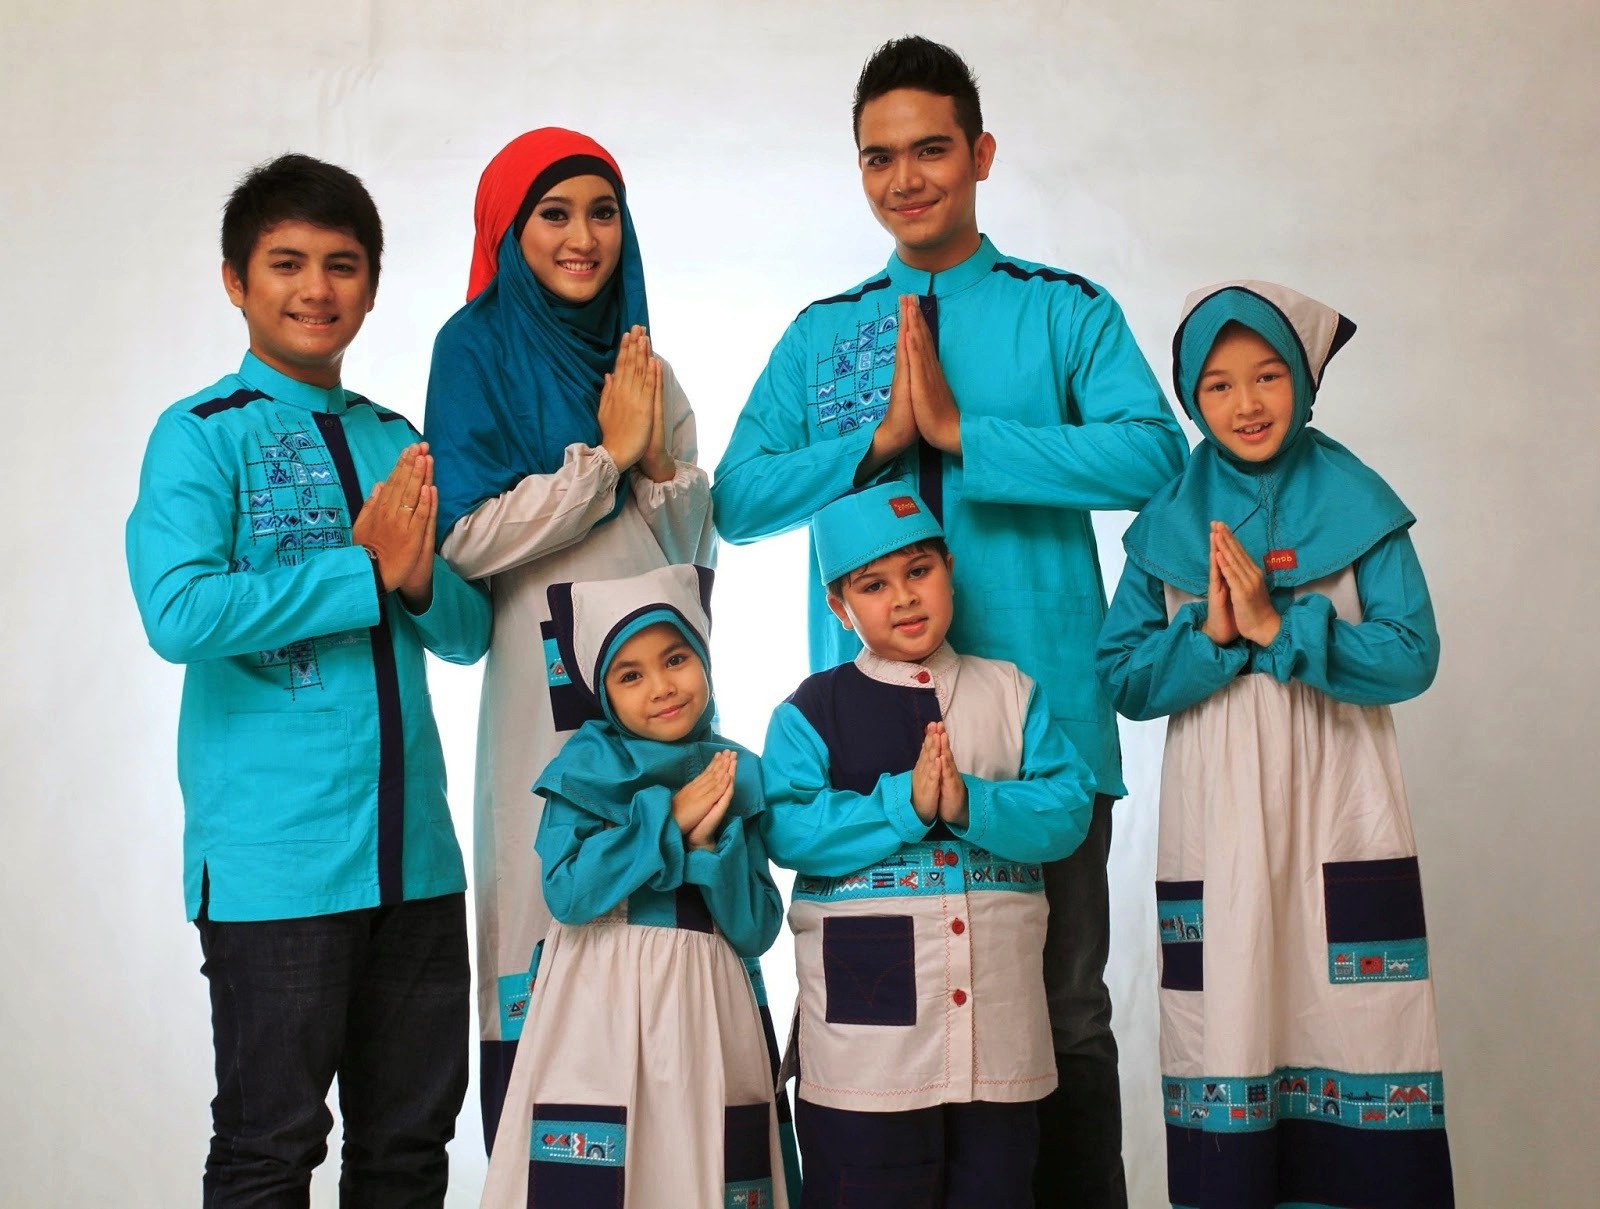 Bentuk Baju Lebaran Keluarga 2018 Irdz Model Baju Muslim Gamis Modern Terbaru 2018 Untuk Lebaran